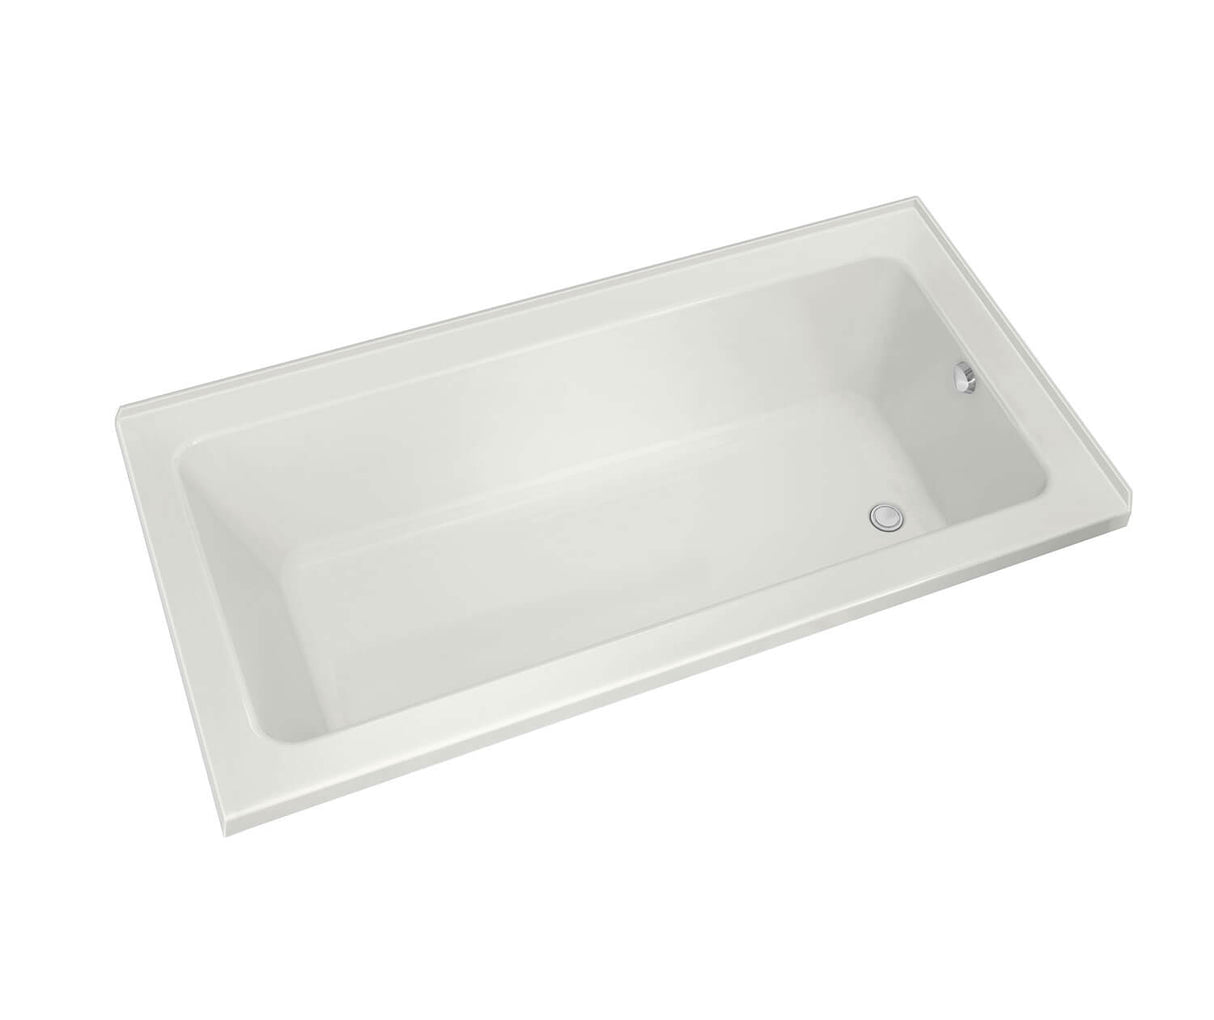 MAAX 106215-000-001-106 Pose 7242 IF Acrylic Corner Right Right-Hand Drain Bathtub in White